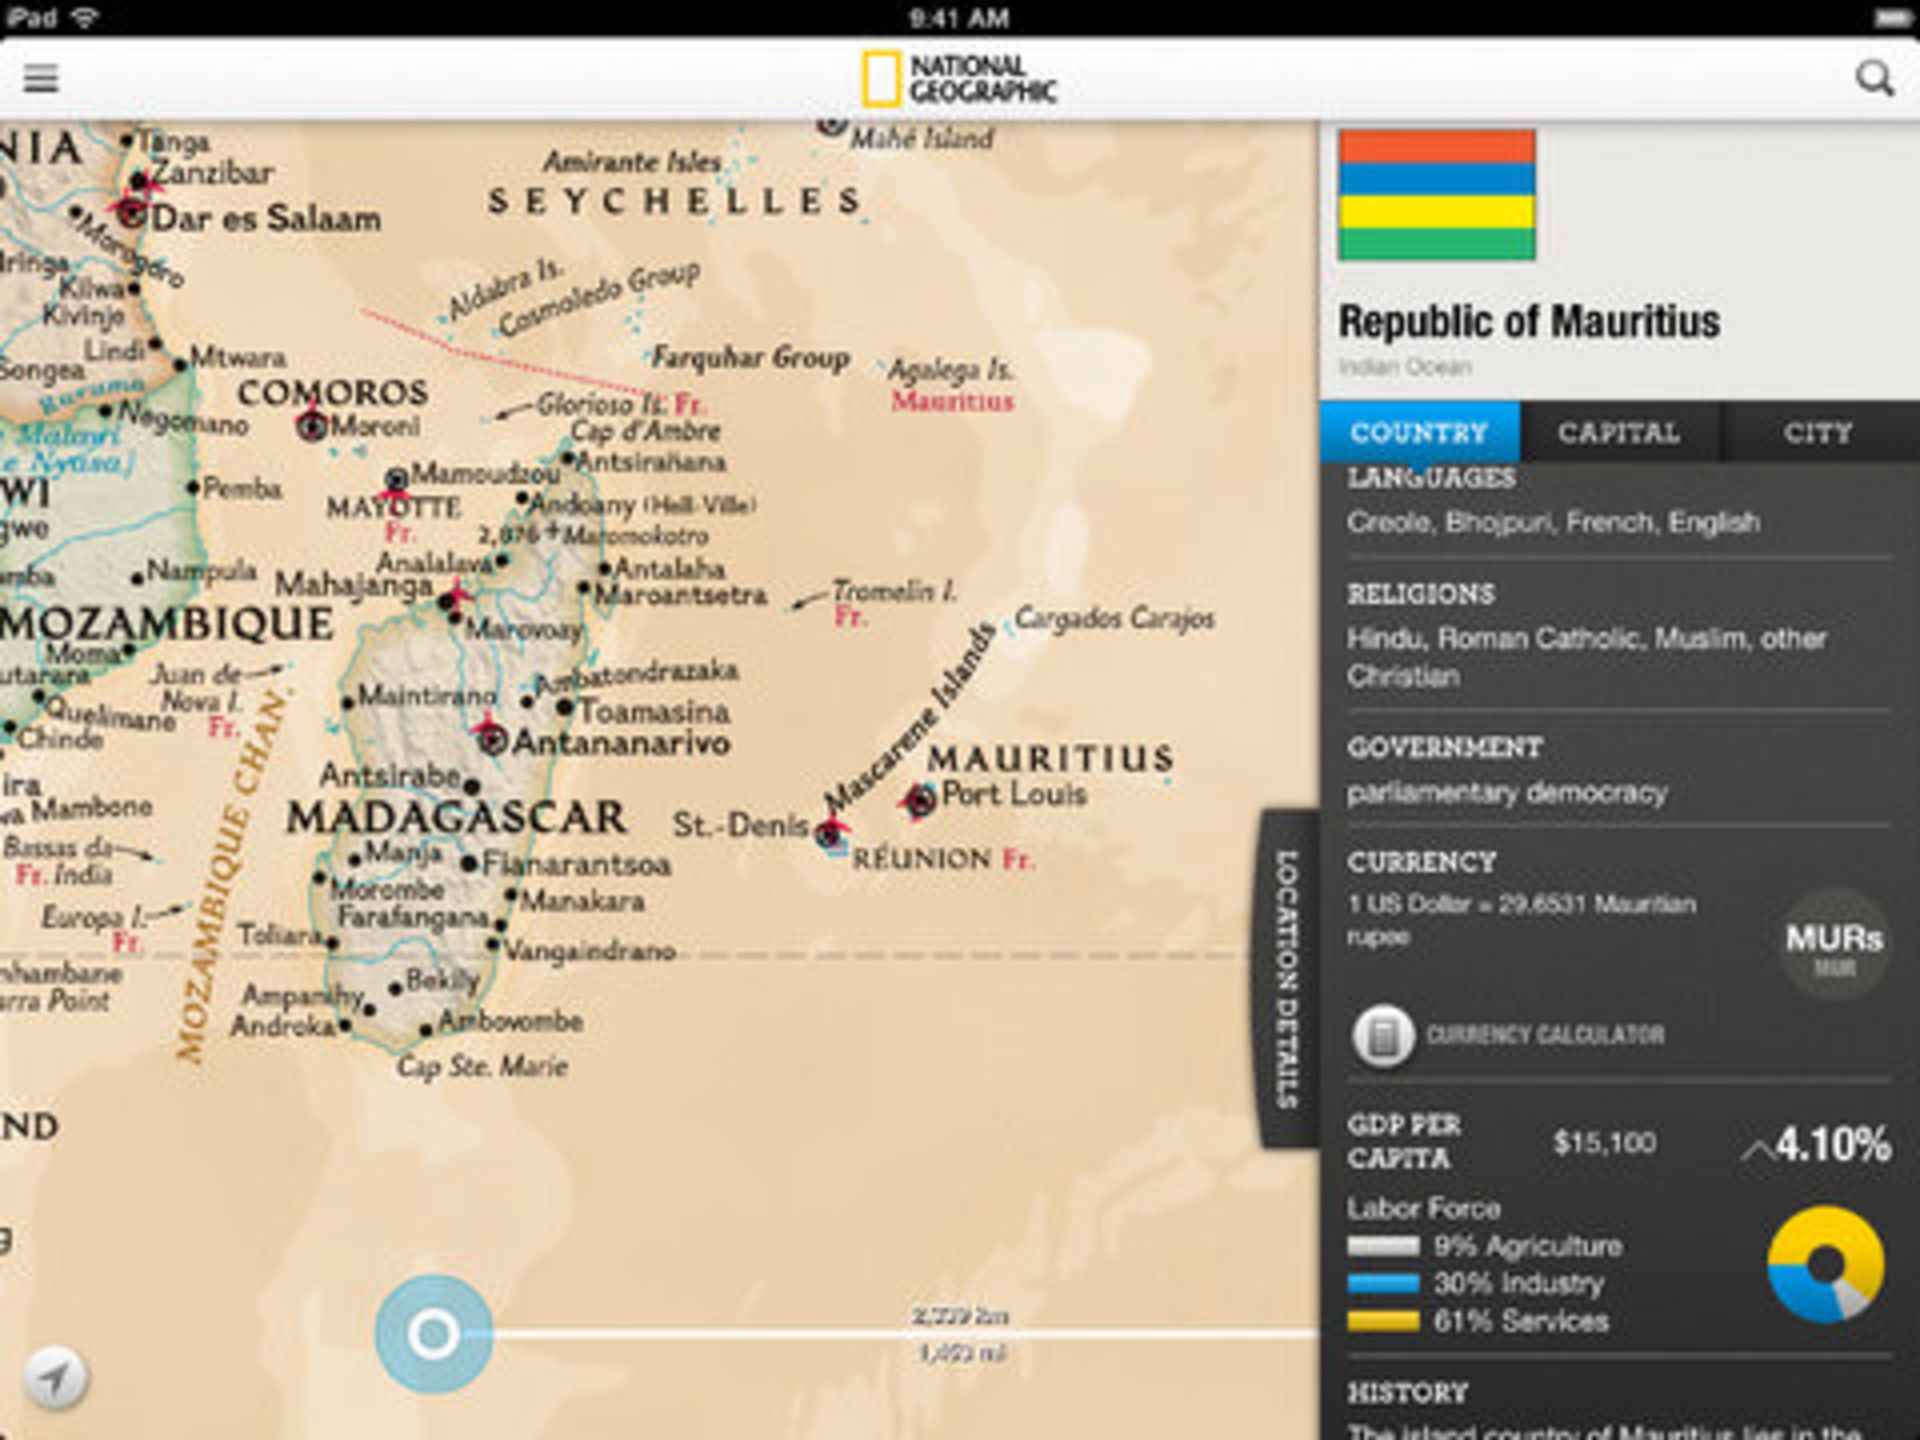 National-Geographic-World-Atlas-3.0.1-for-iOS-iPad-screenshot-003